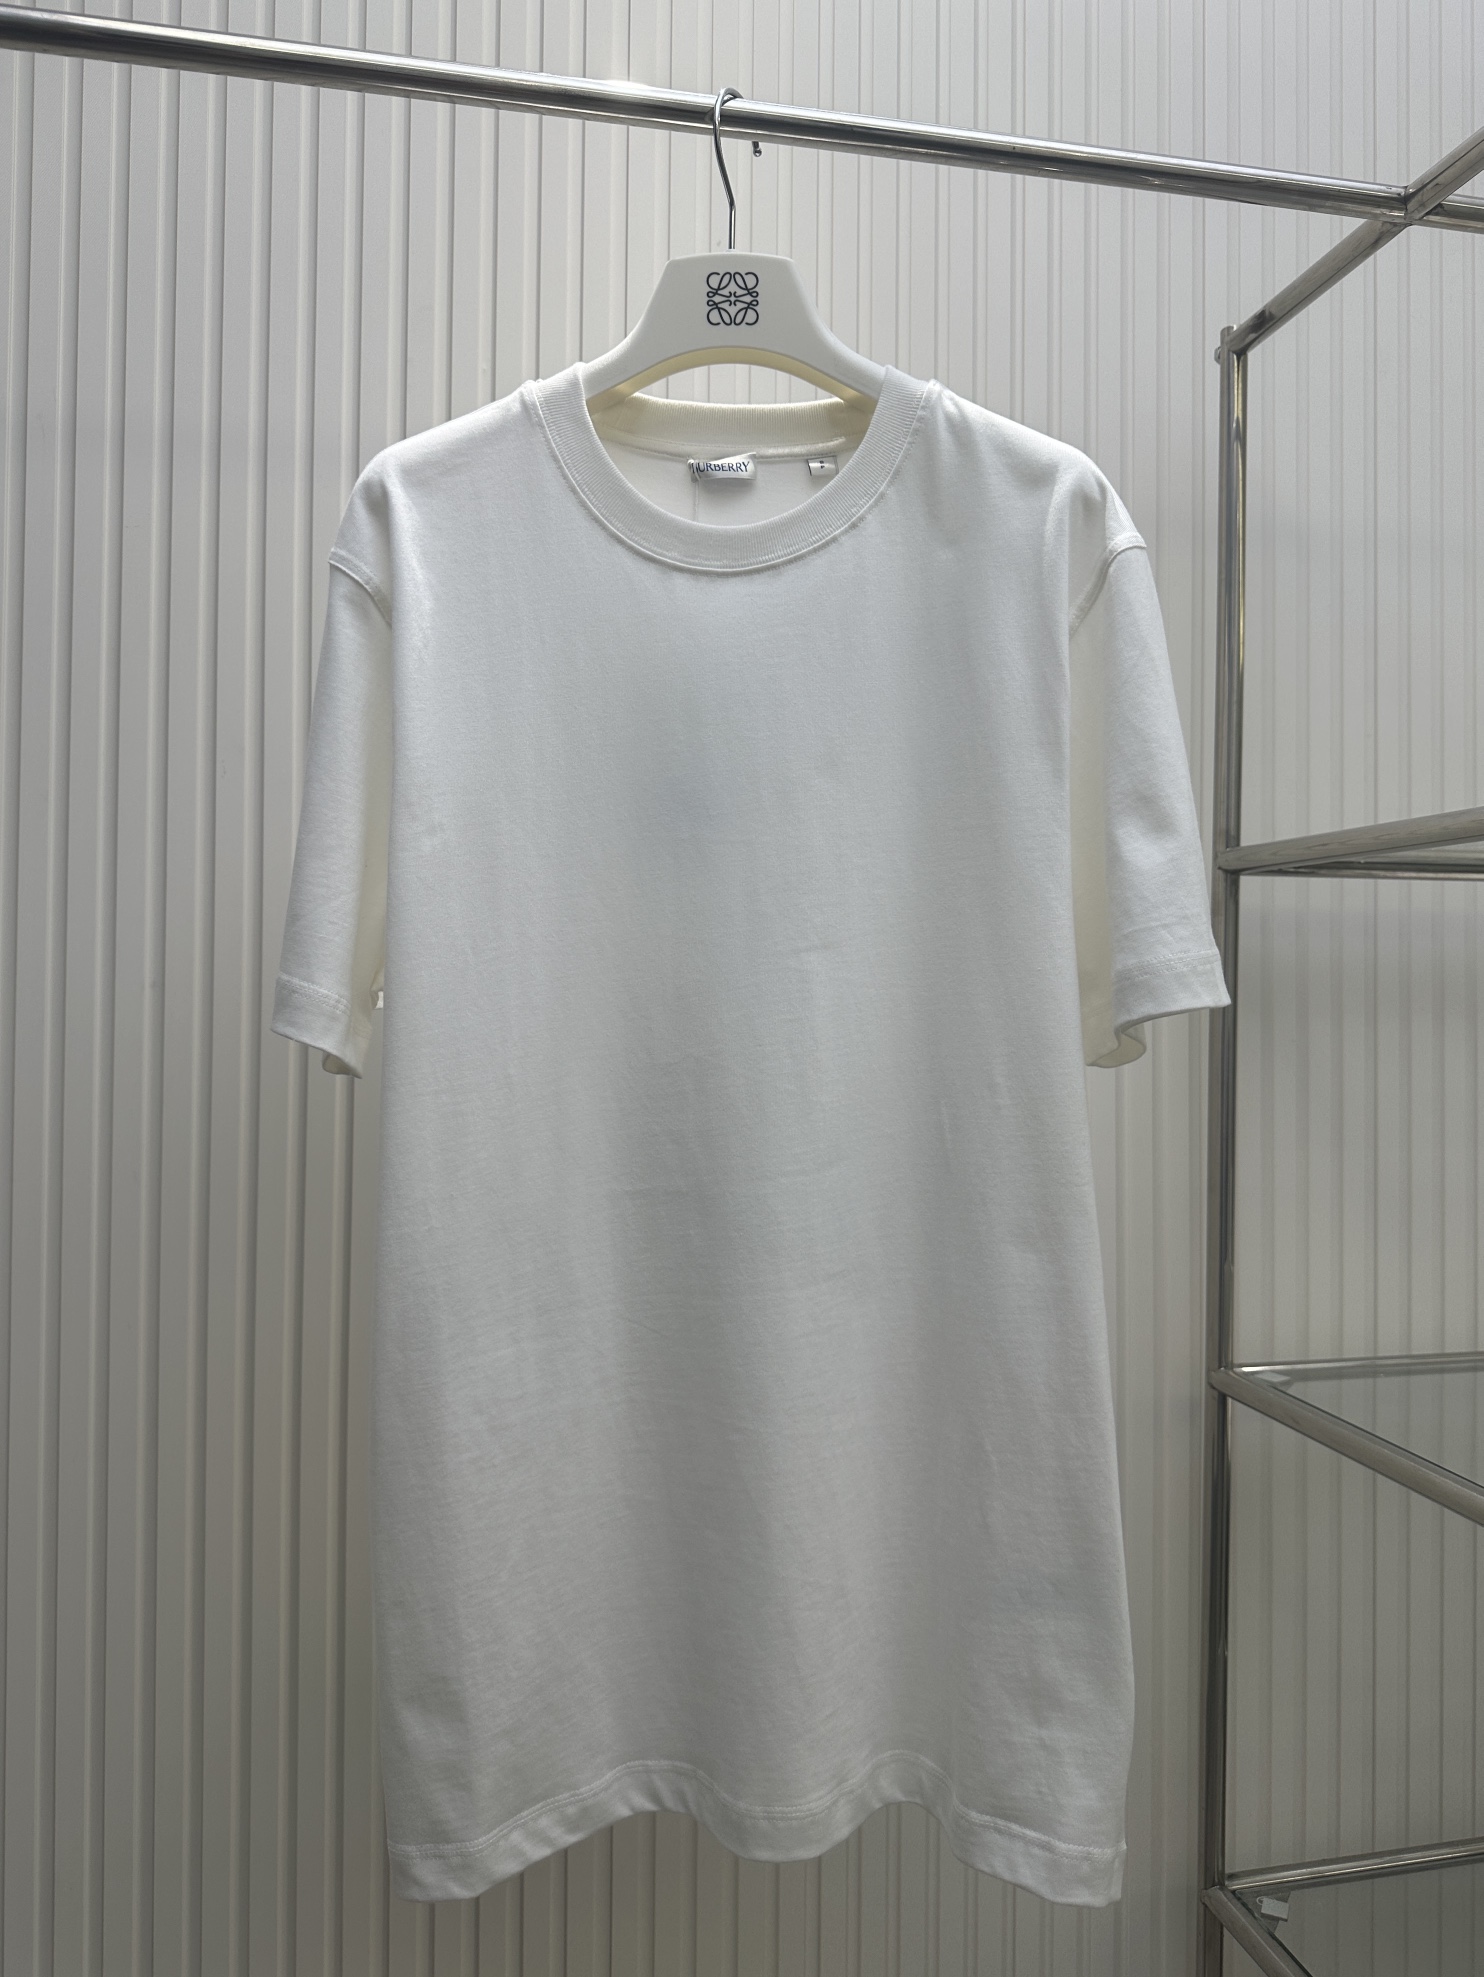 Burberry Clothing T-Shirt High Quality Perfect
 Printing Short Sleeve